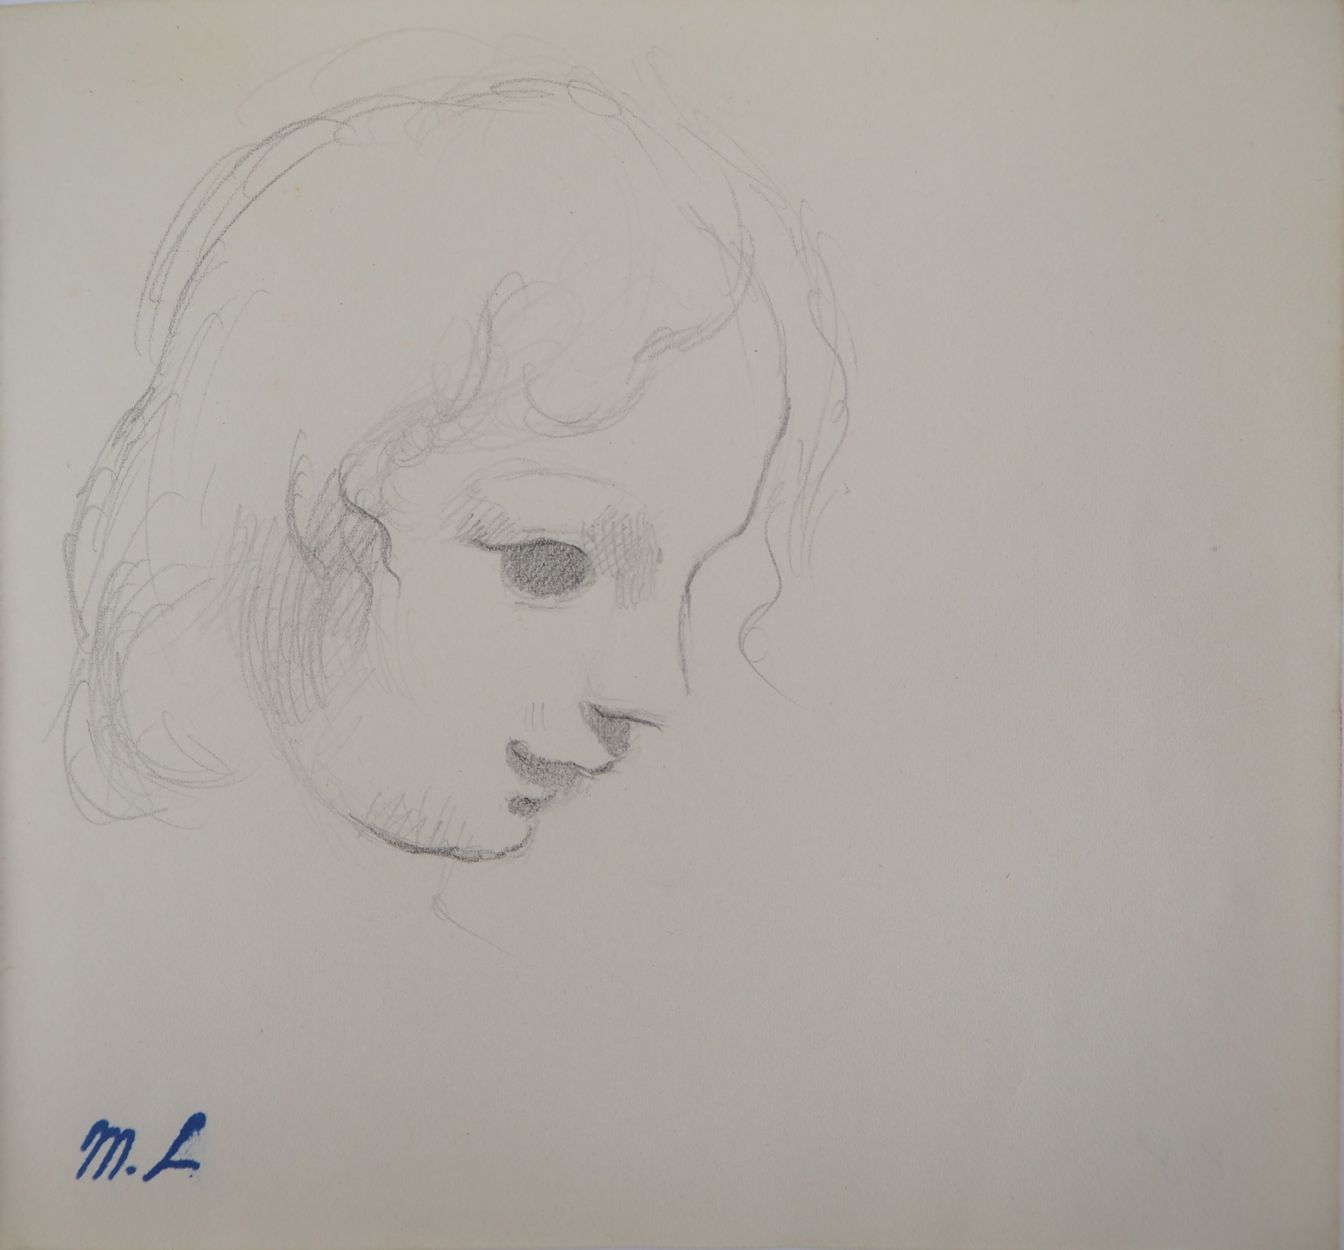 MARIE LAURENCIN Marie LAURENCIN

儿童的头部

原始铅笔画

签名并盖有艺术家的印章

纸本 13,5 x 14,5 cm

非&hellip;